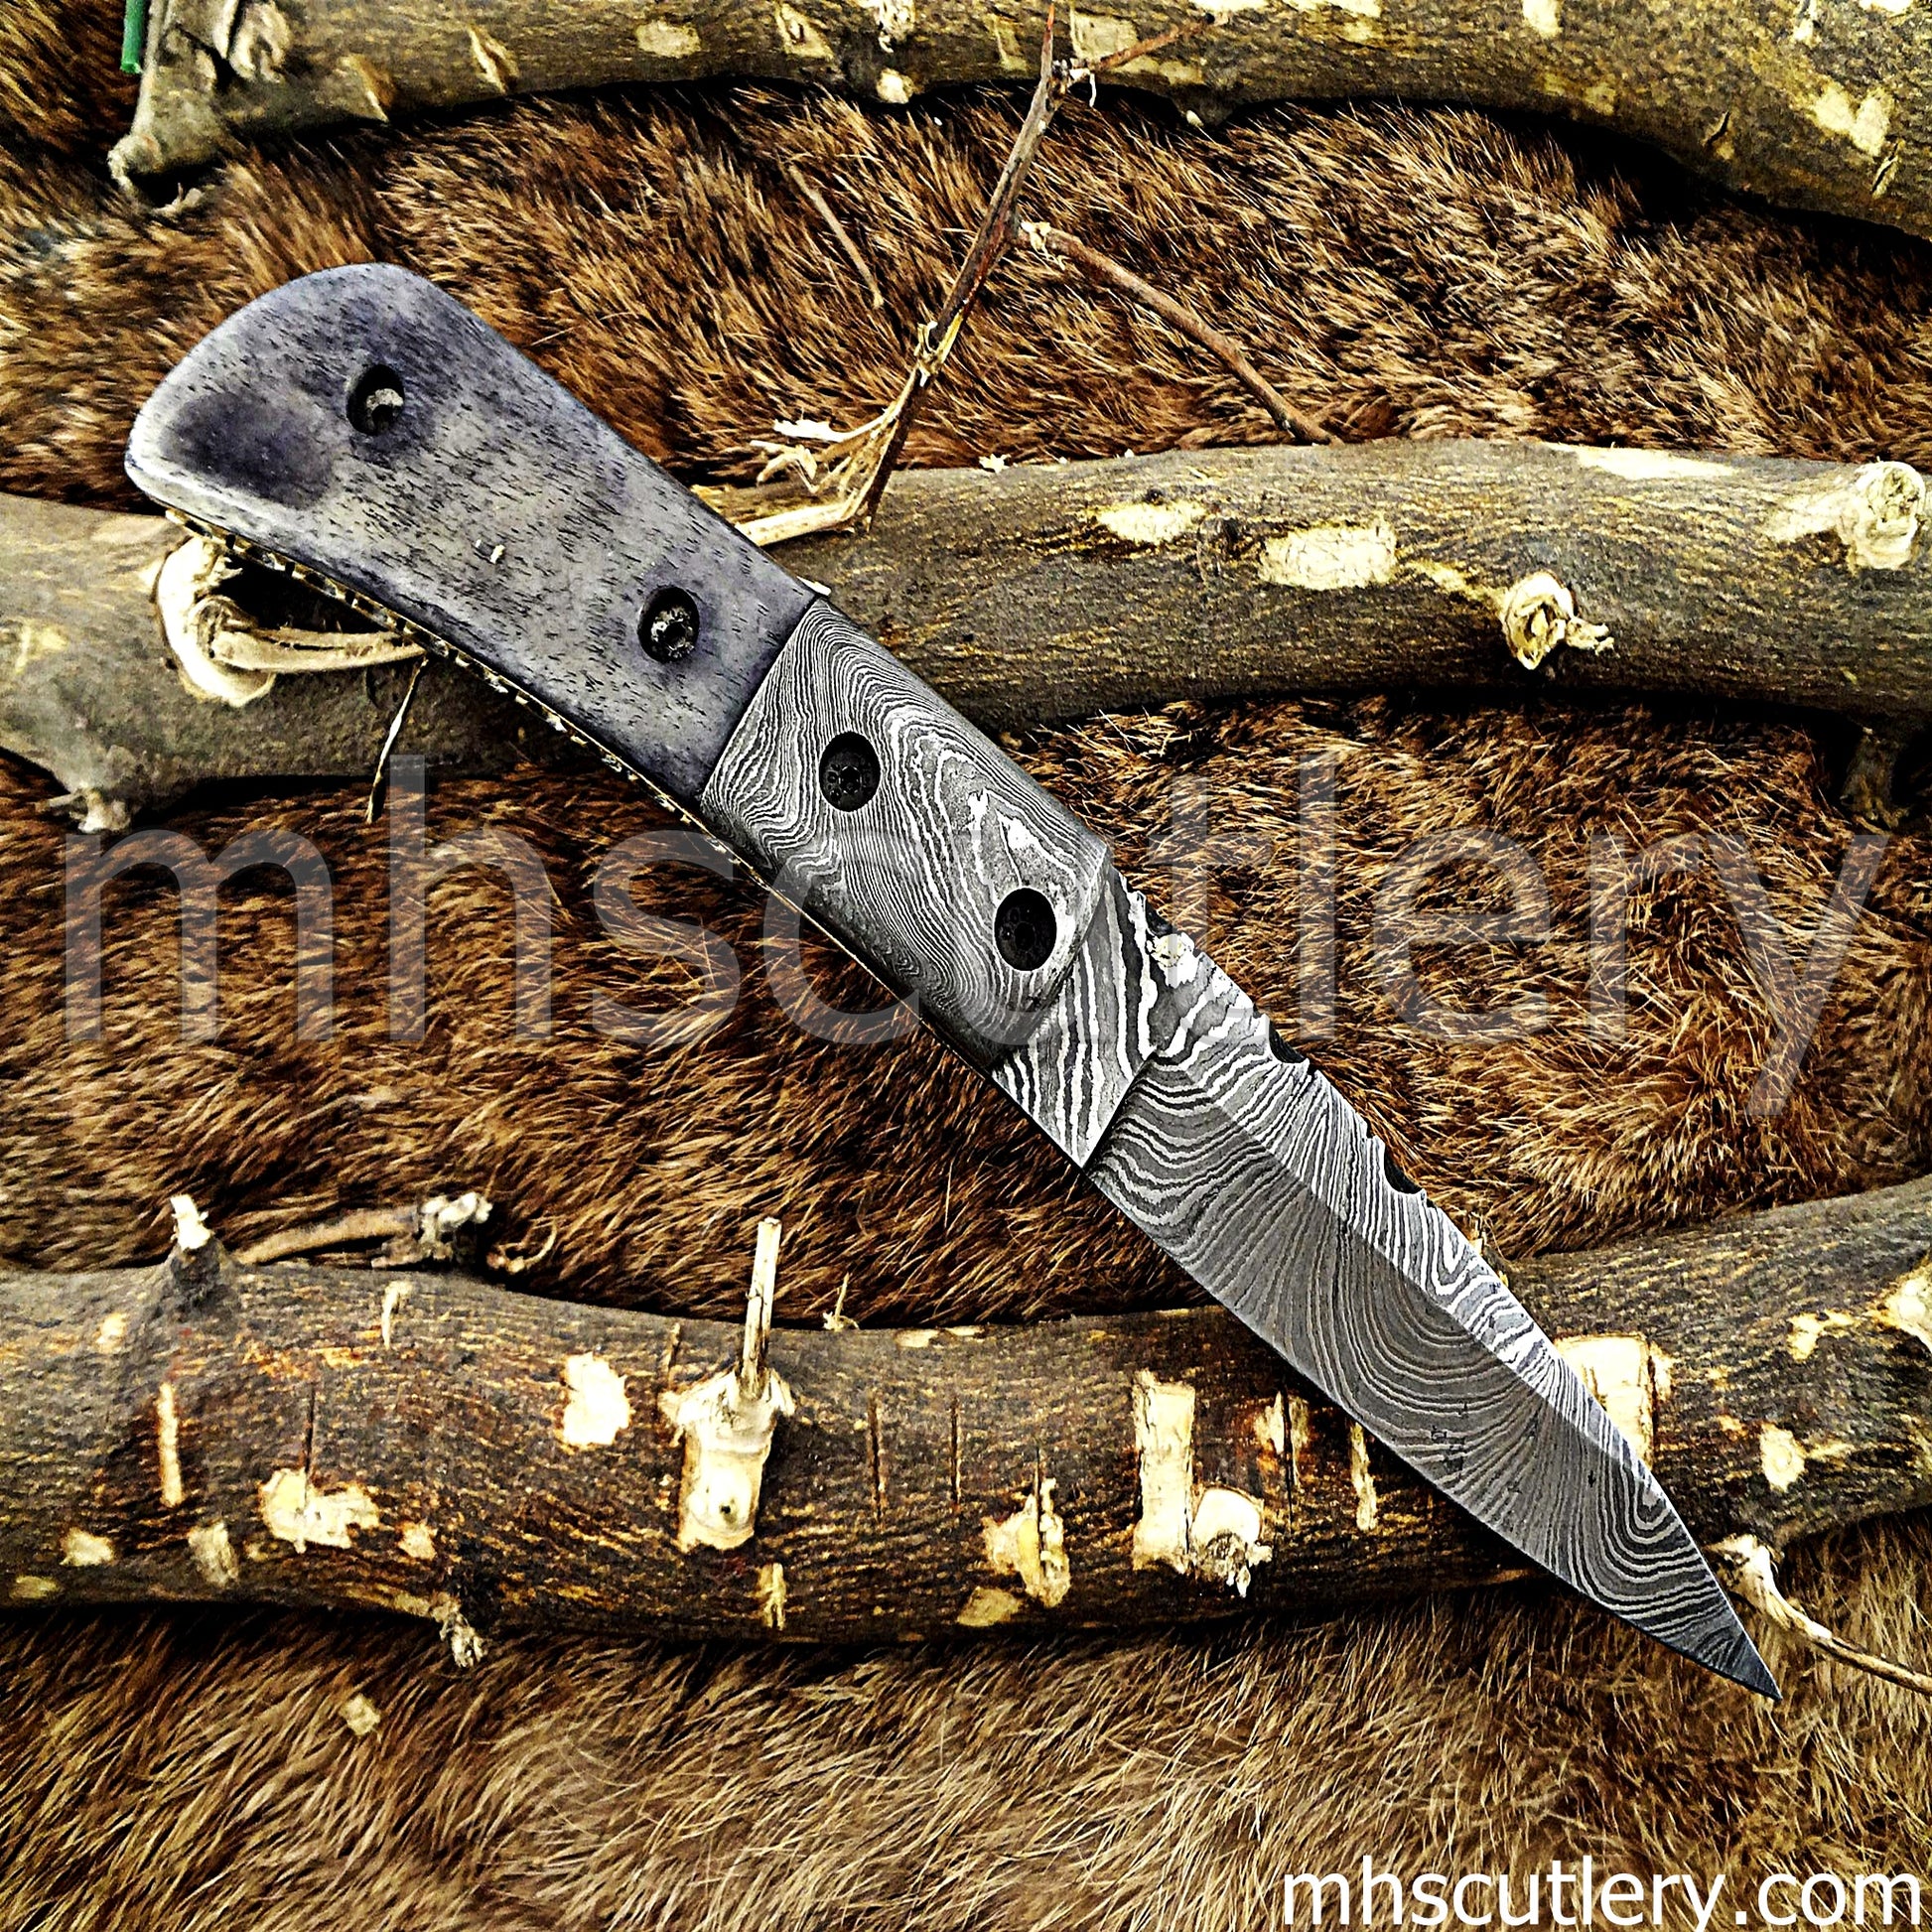 Handmade Damascus Steel Folding Knife | mhscutlery